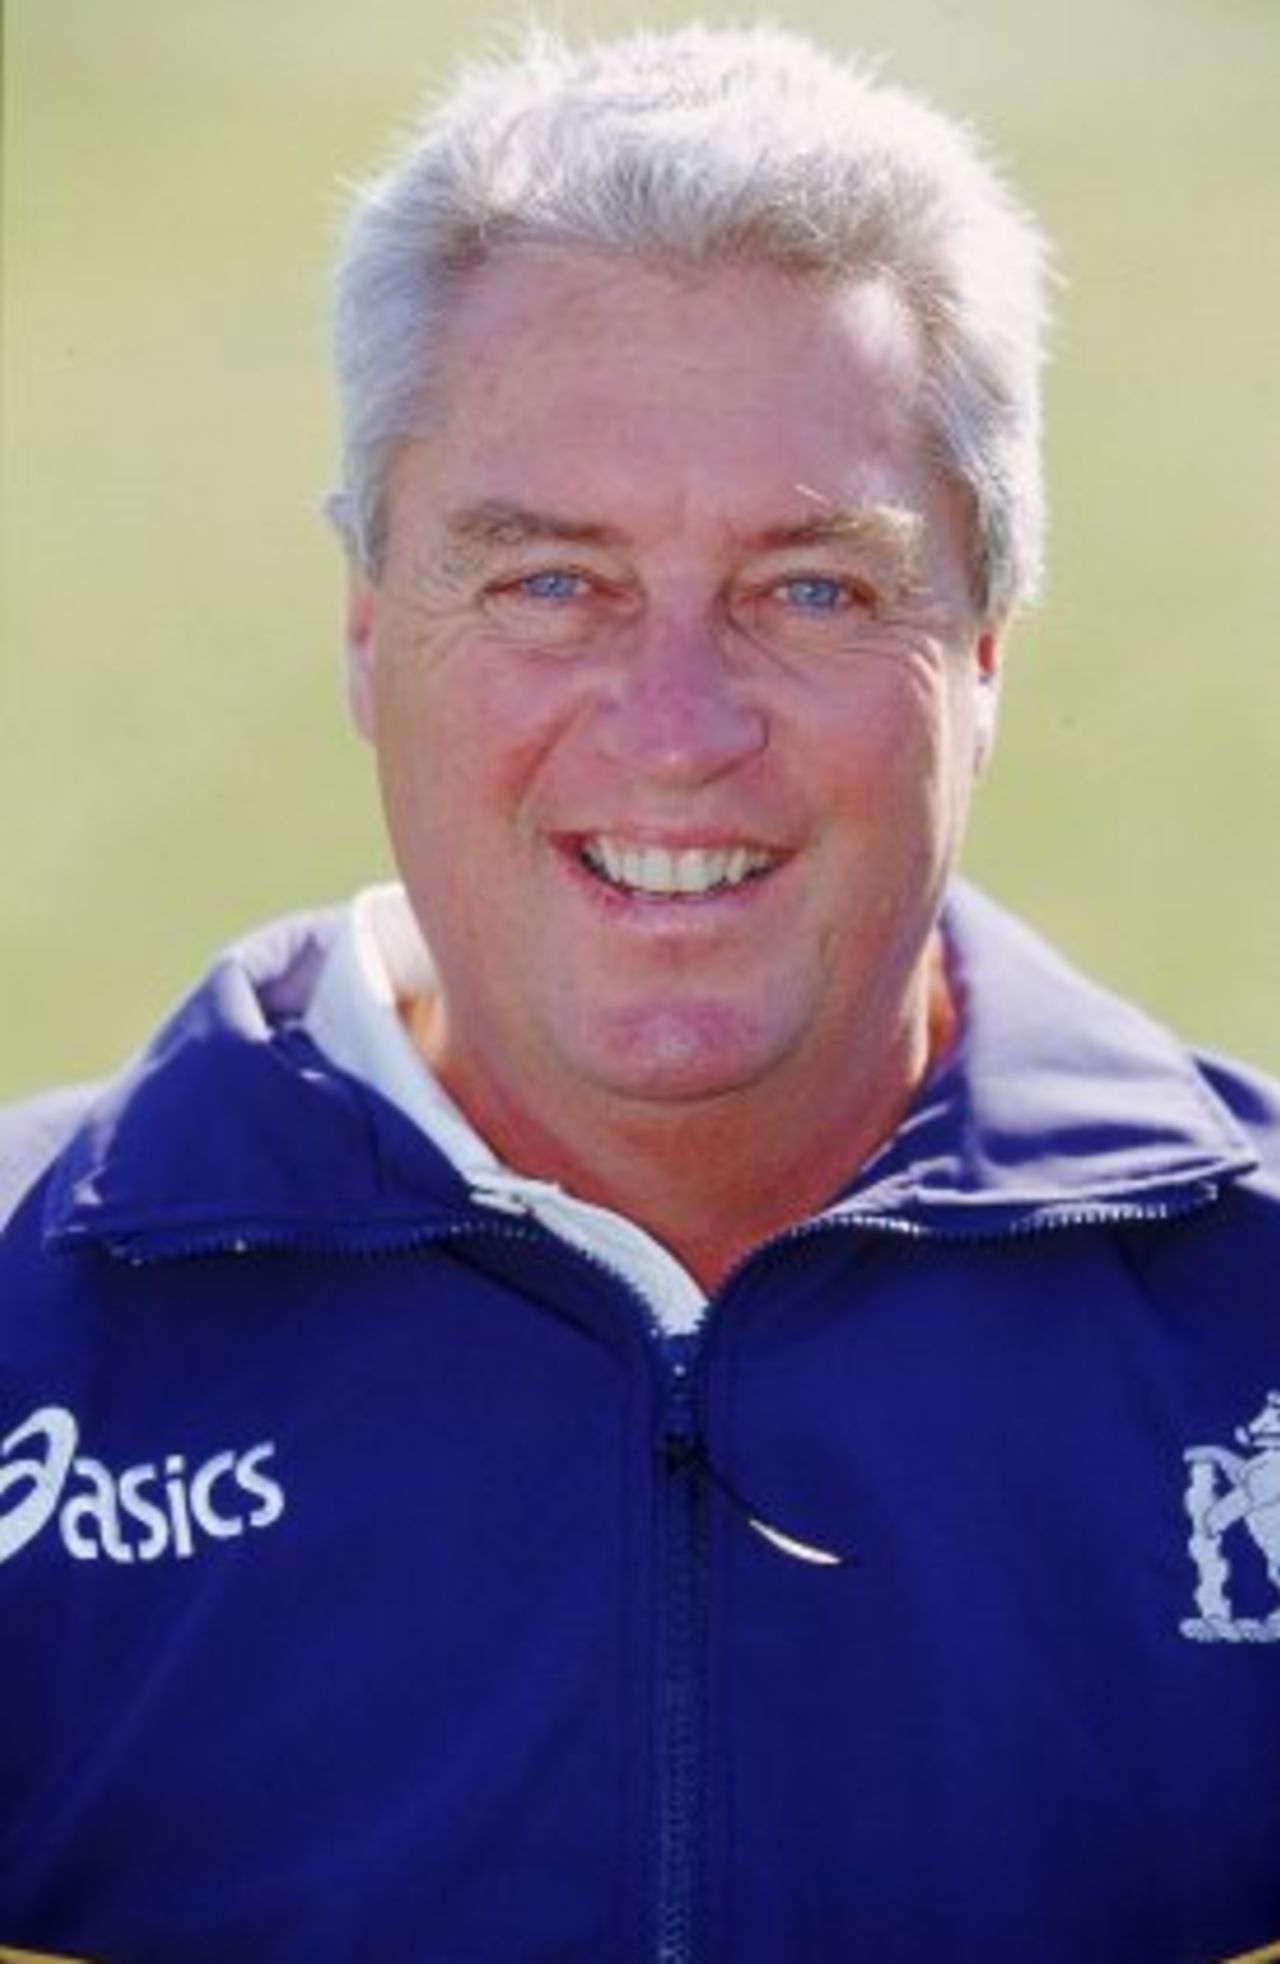 6 Apr 2000: Portrait of Bob Woolmer taken at a Warwickshire County Cricket Club photocall at Edgbaston in Birmingham.